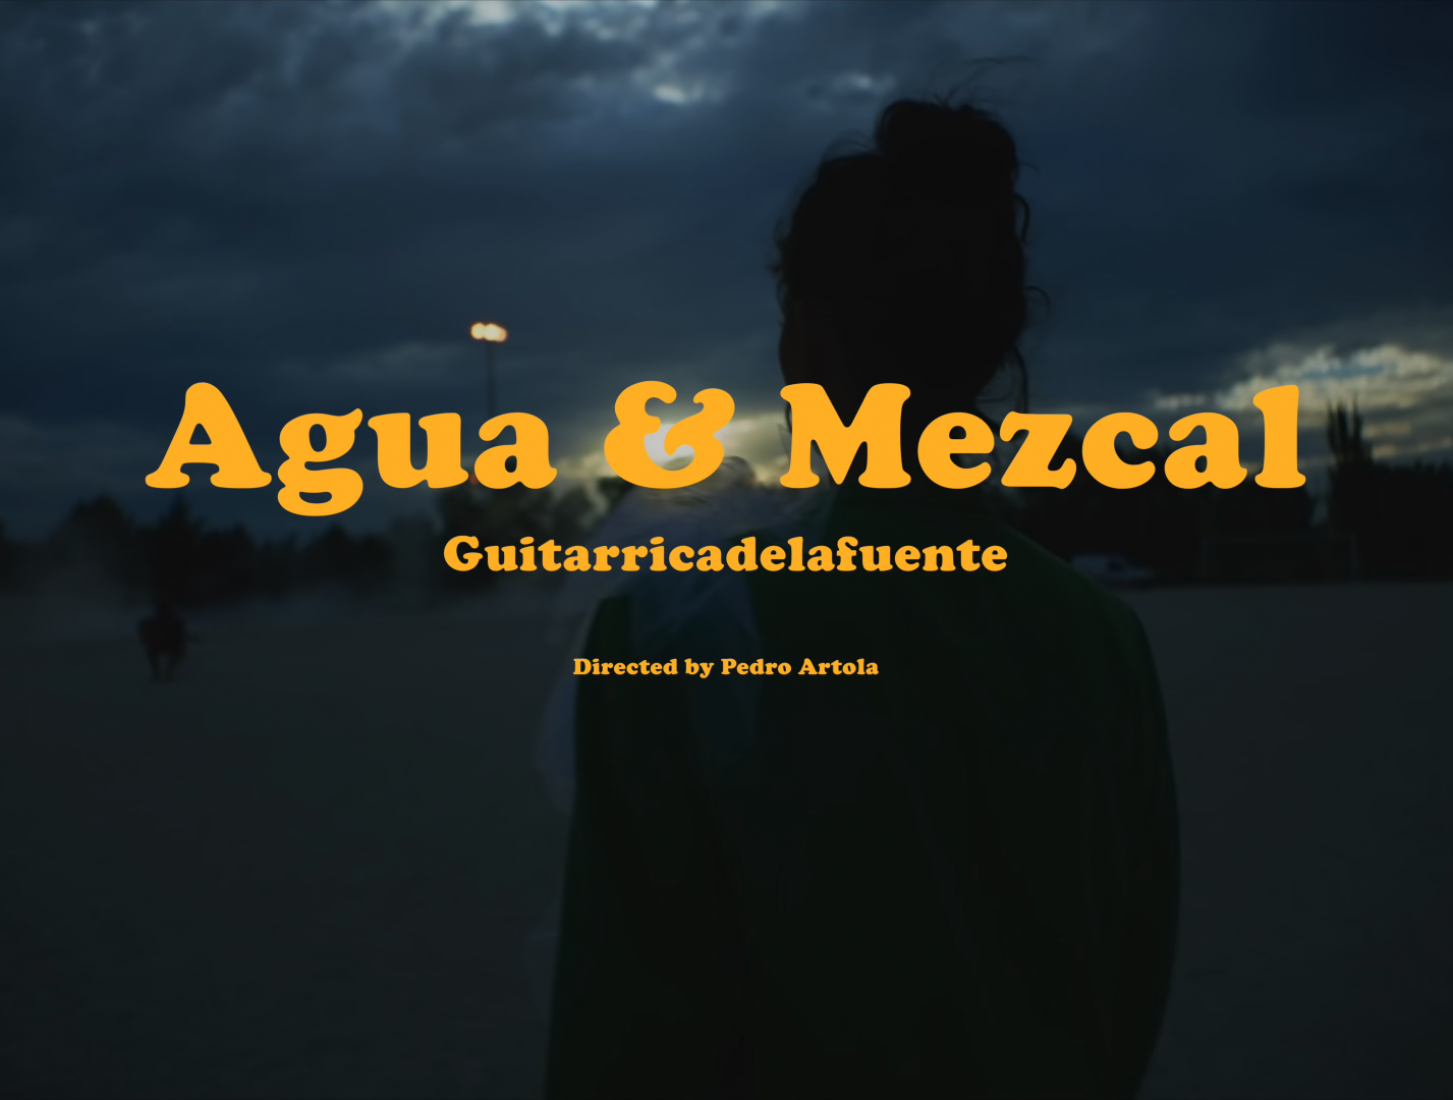 Agua y Mezcal by Guitarricadelafuente.